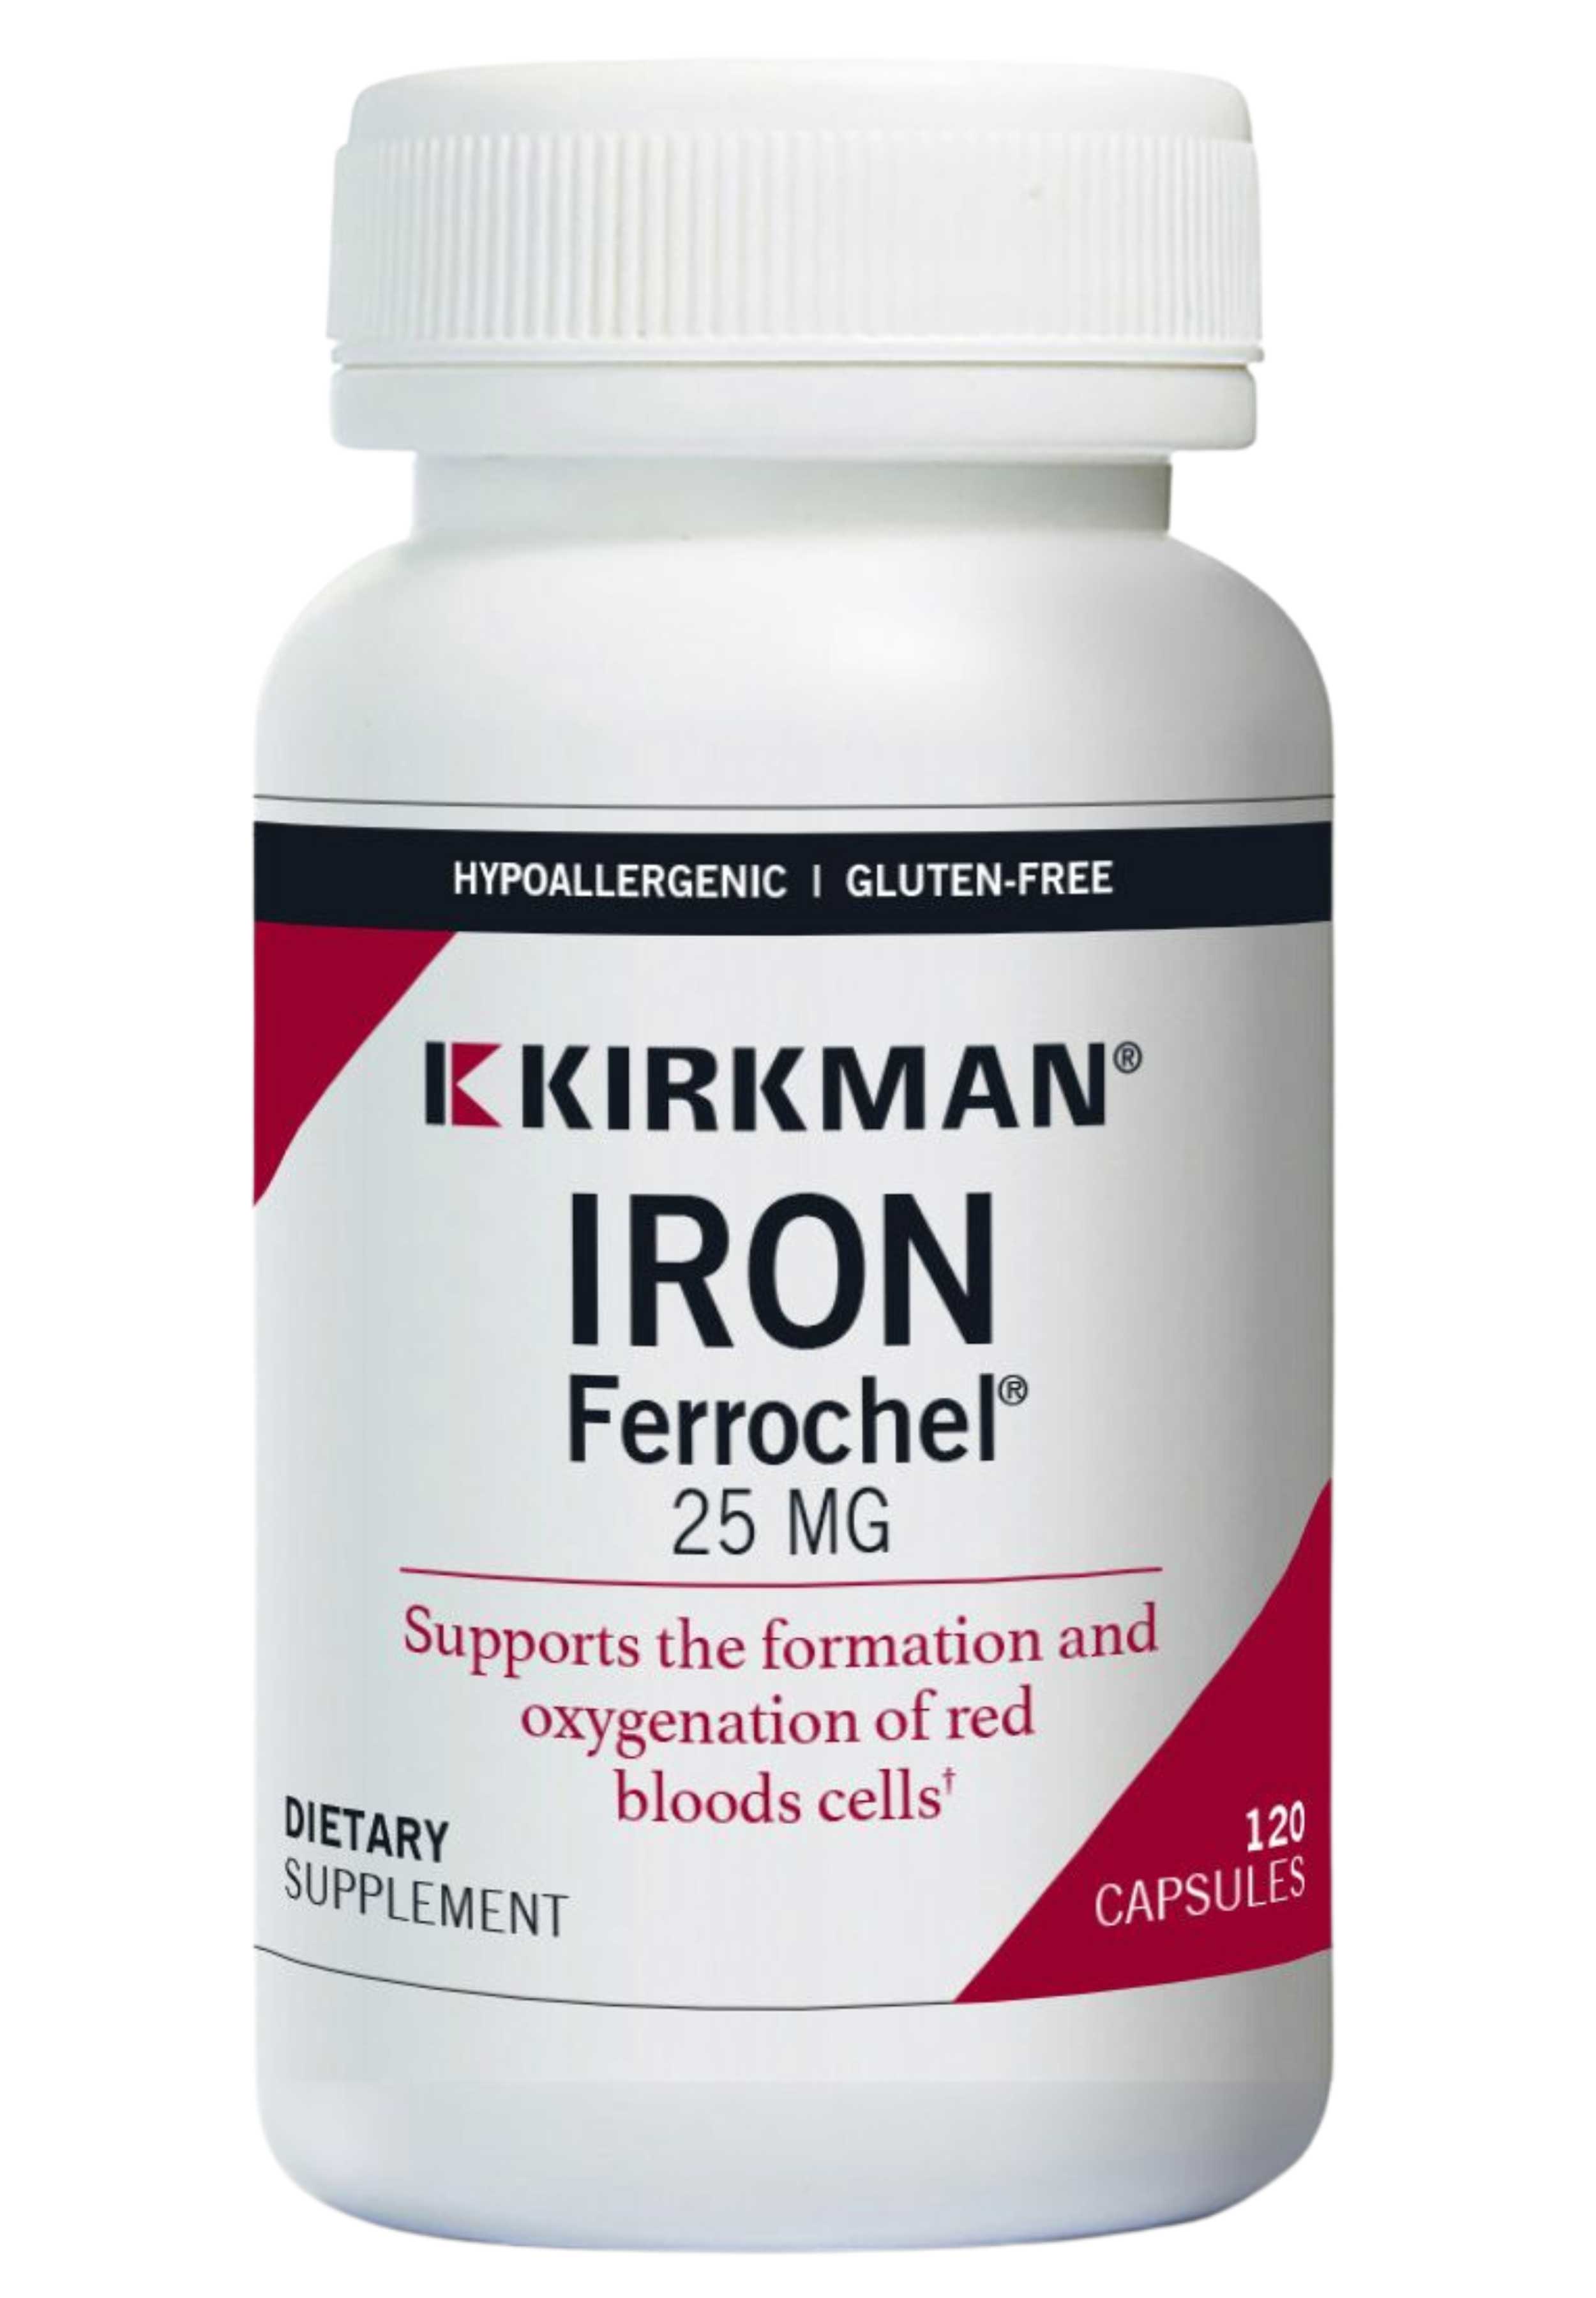 Kirkman Iron Ferrochel 25 mg (Formerly Iron 25 mg)